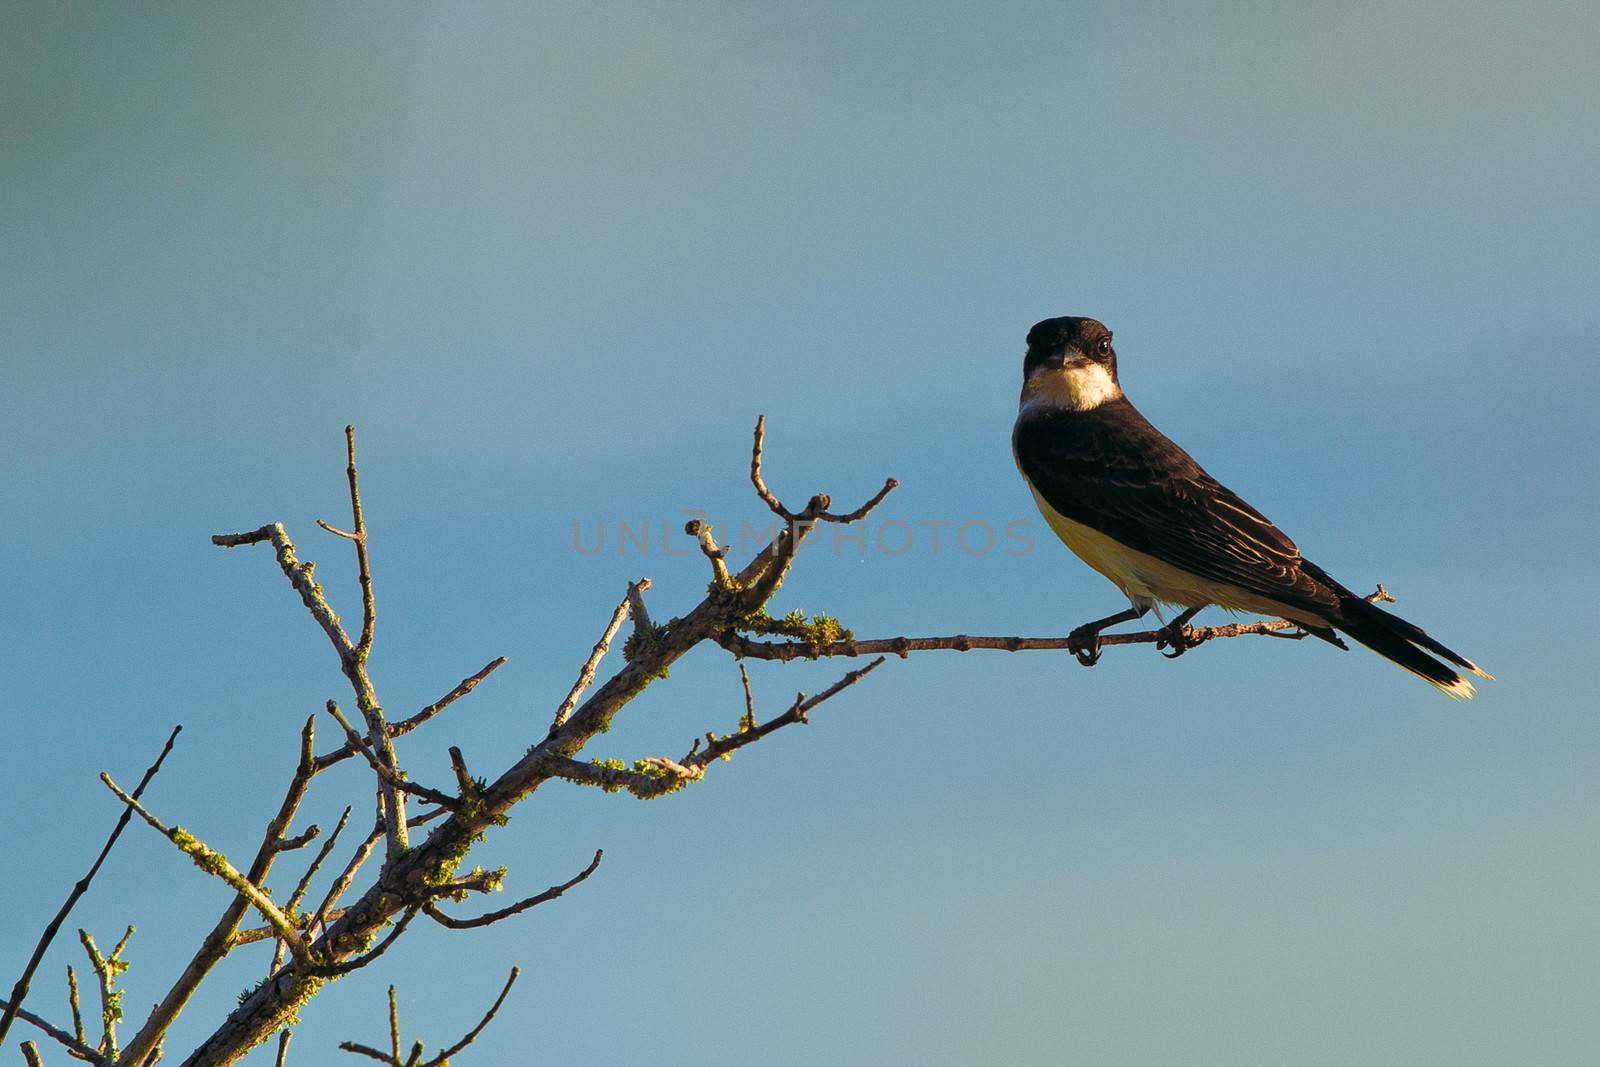 Bird perched on tree branch by CelsoDiniz